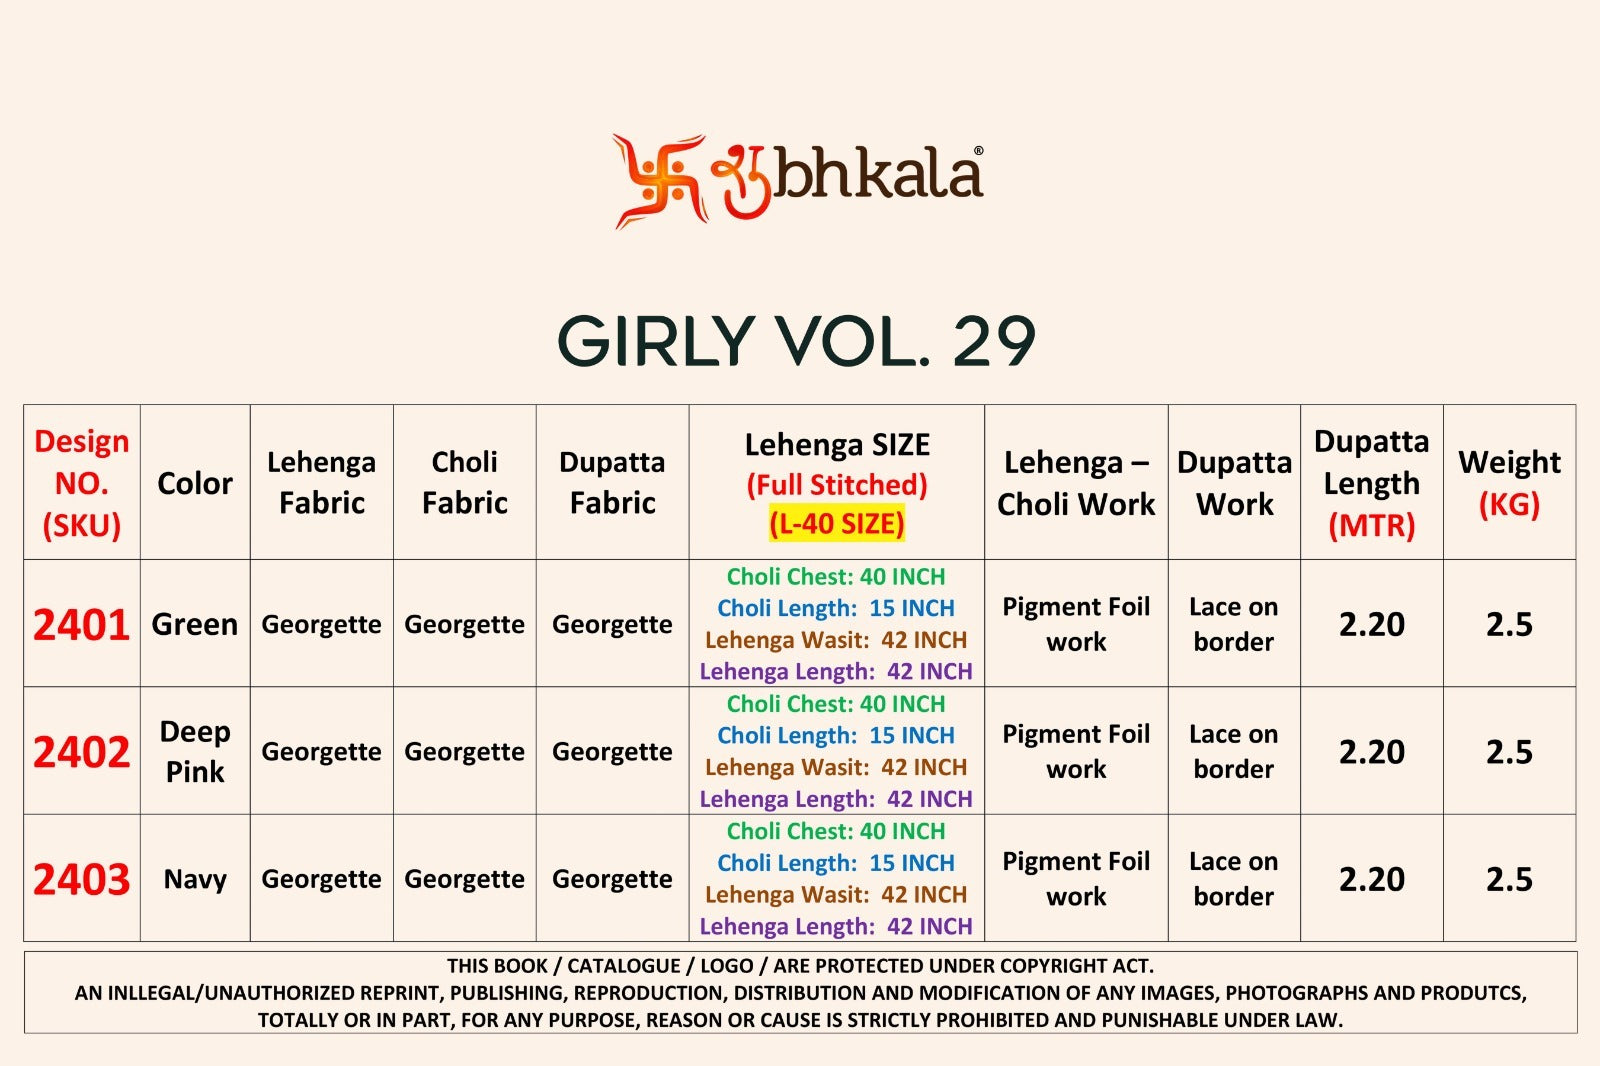 Girly Vol 29 Shubhkala Georgette Readymade Lehenga Choli Manufacturer India